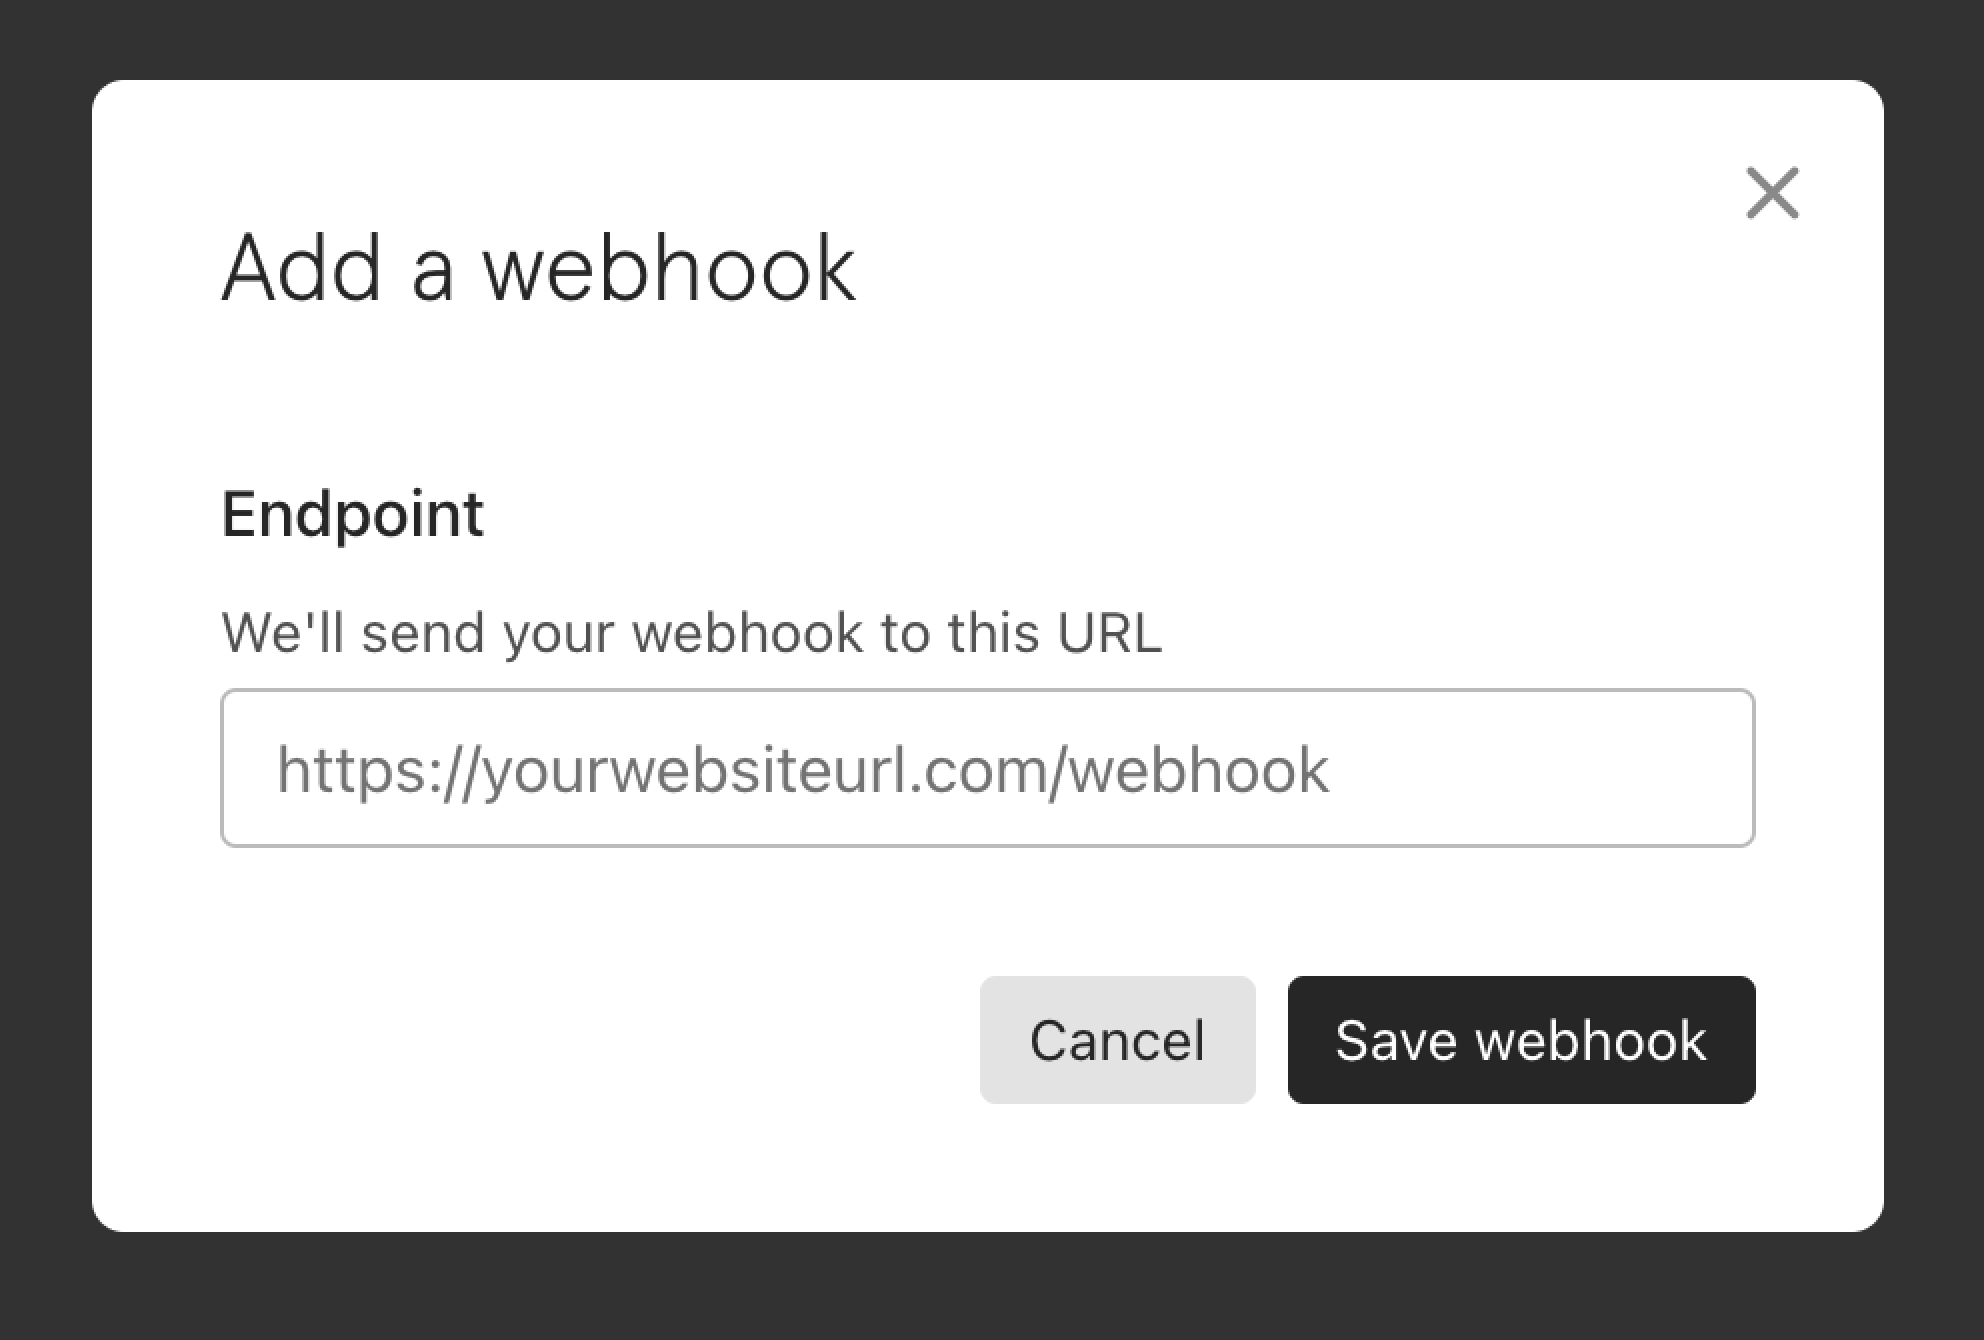 Typeform - Add a webhook